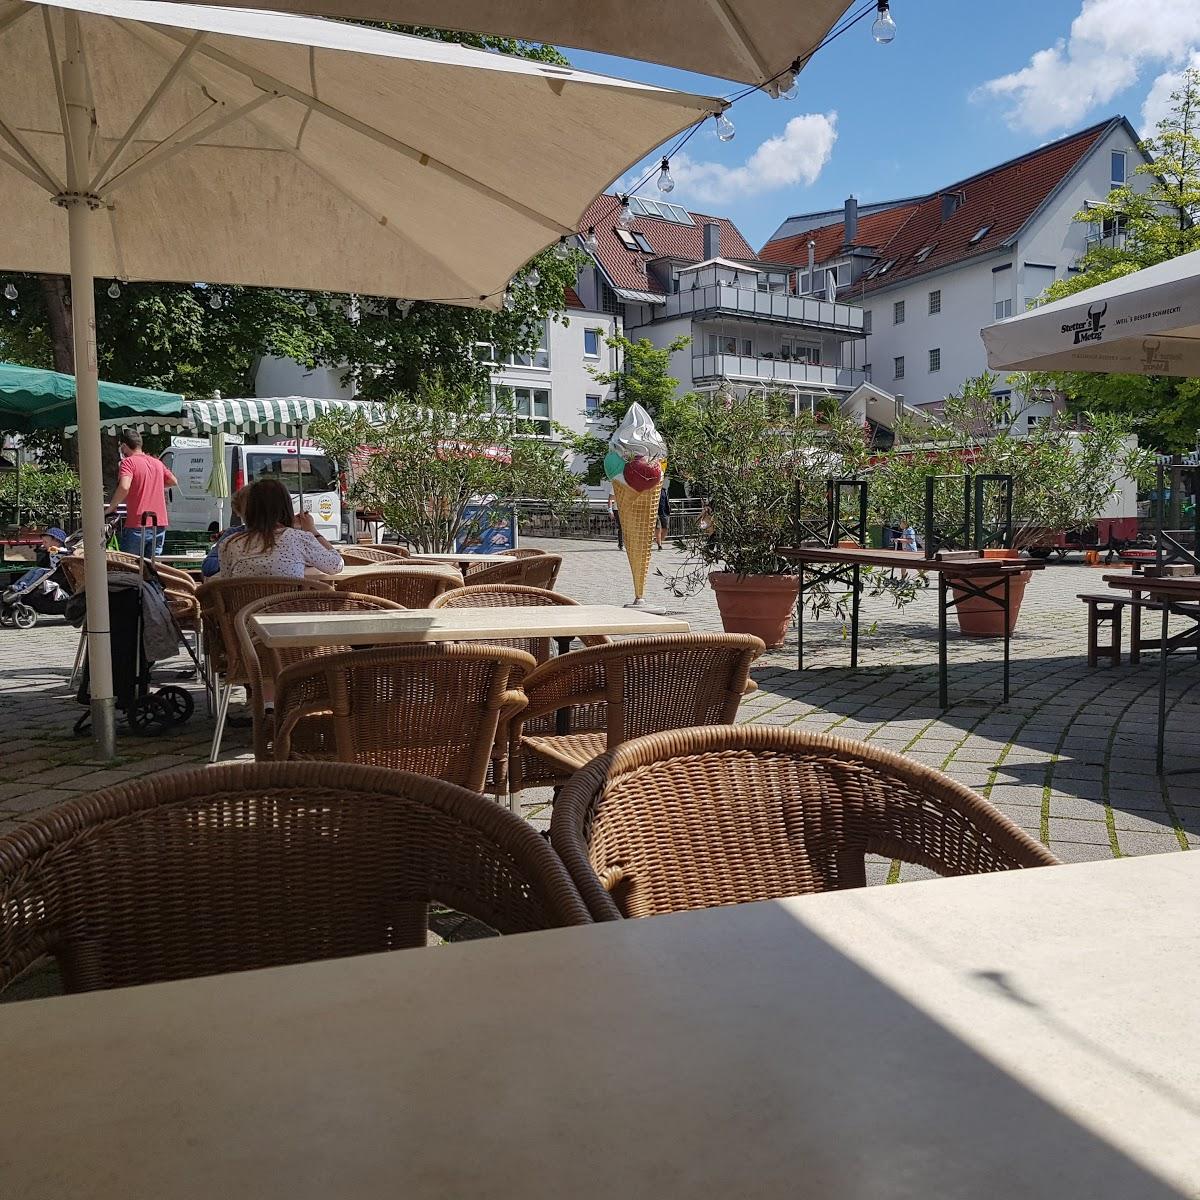 Restaurant "La Piazza" in Wernau (Neckar)